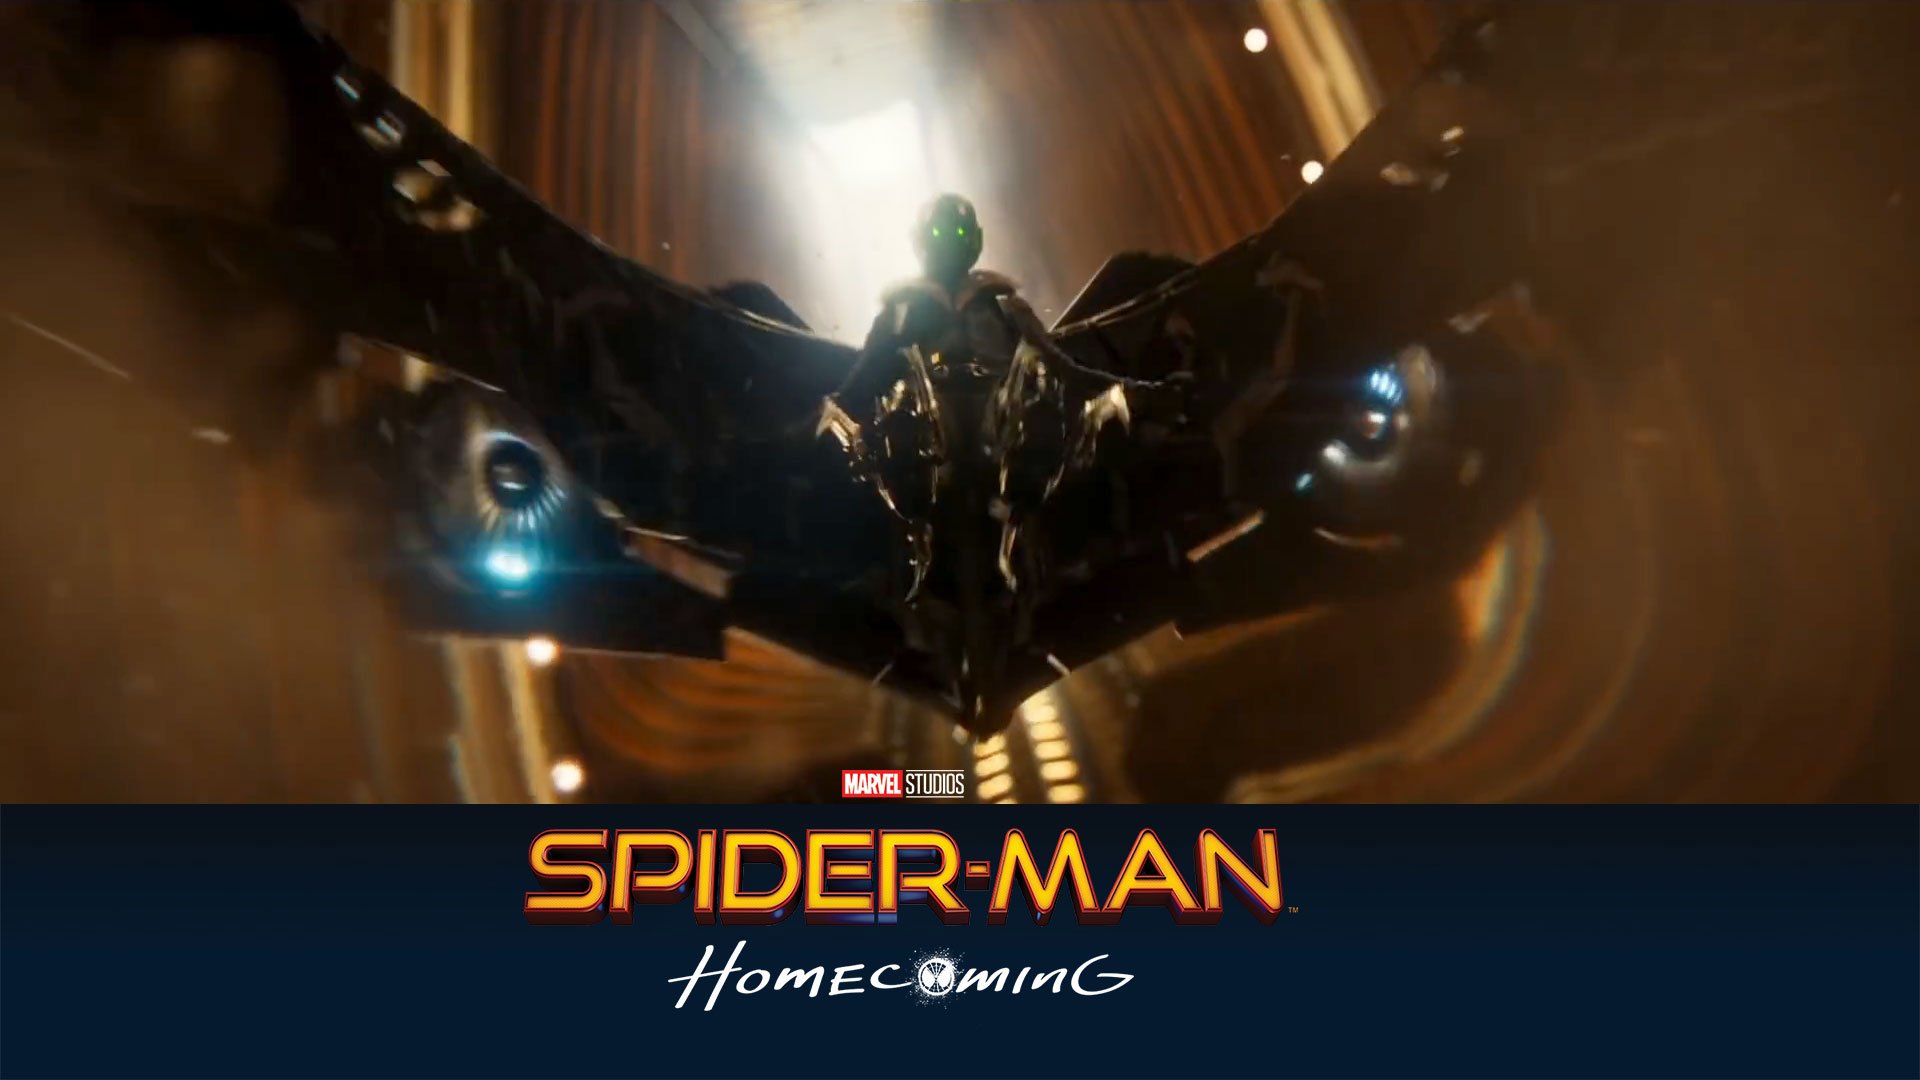 SpiderMan (2017) Movie Desktop Wallpapers